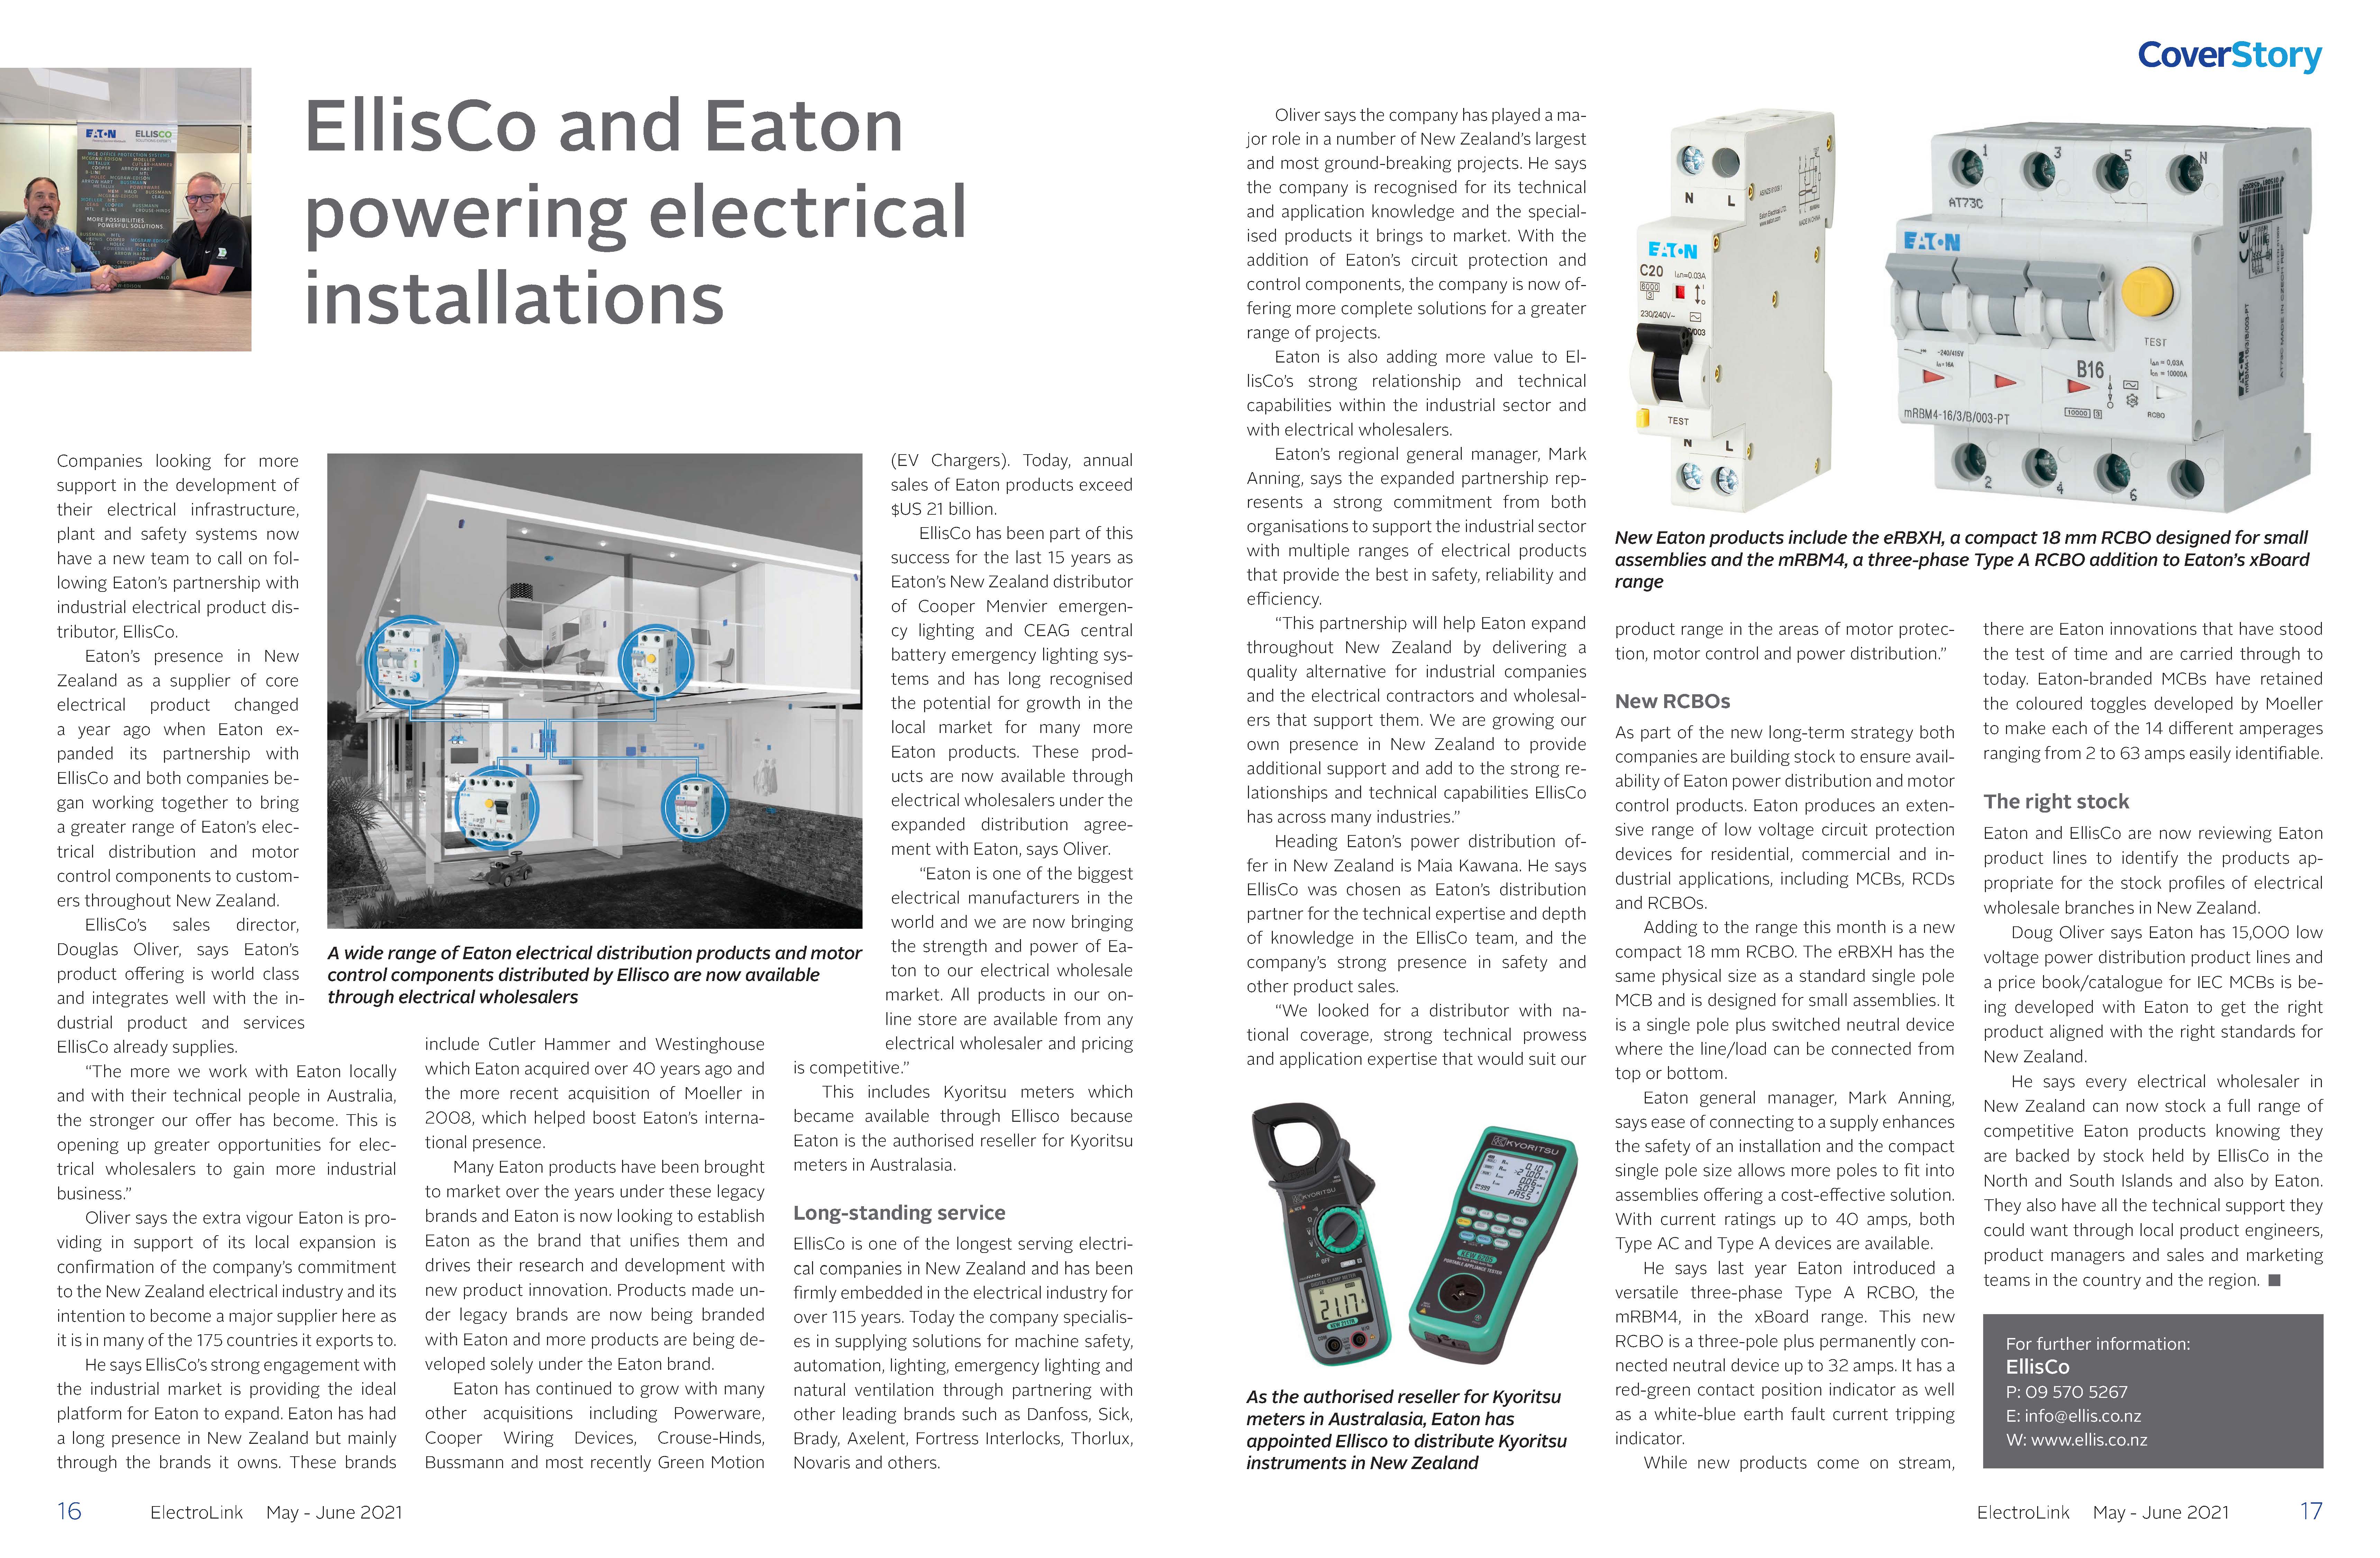 EllisCo Eaton ElectroLink article Page 2